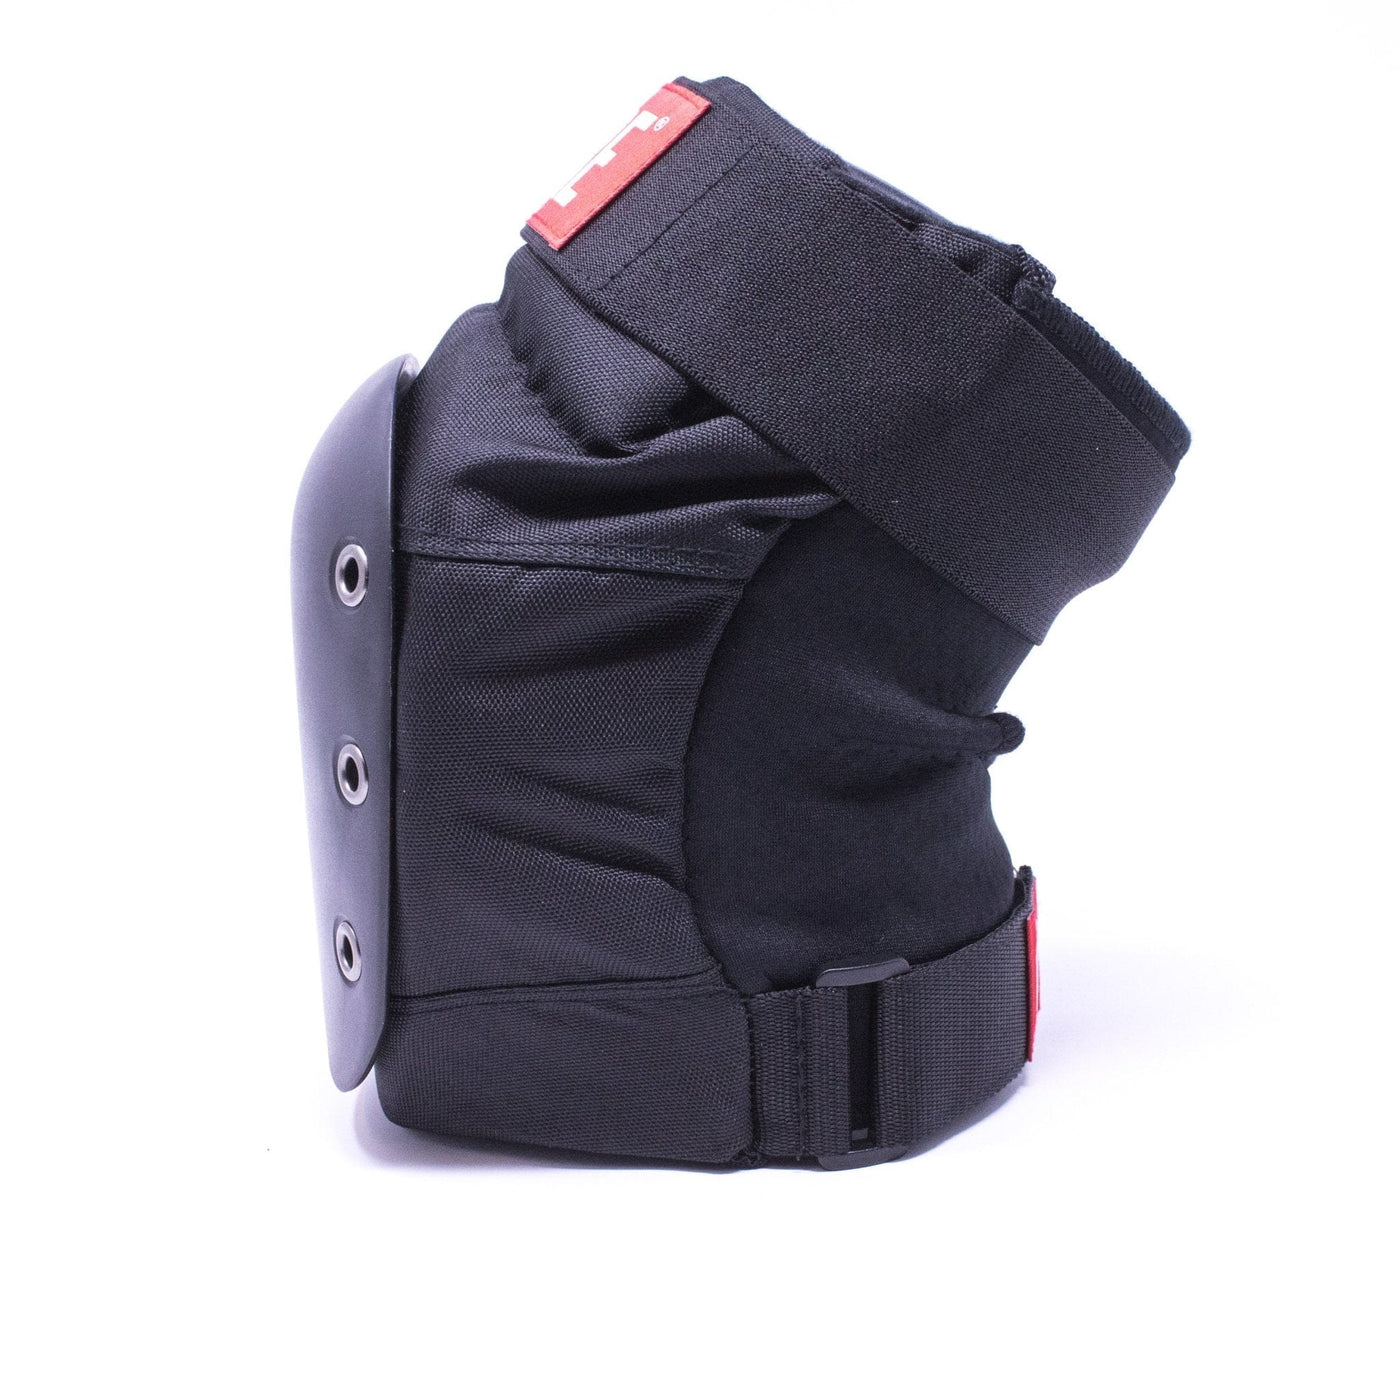 CORE Protection Triple Pro Street Pad Set (Knee/Elbow/Wrist) I Skateboard Protective Gear Side